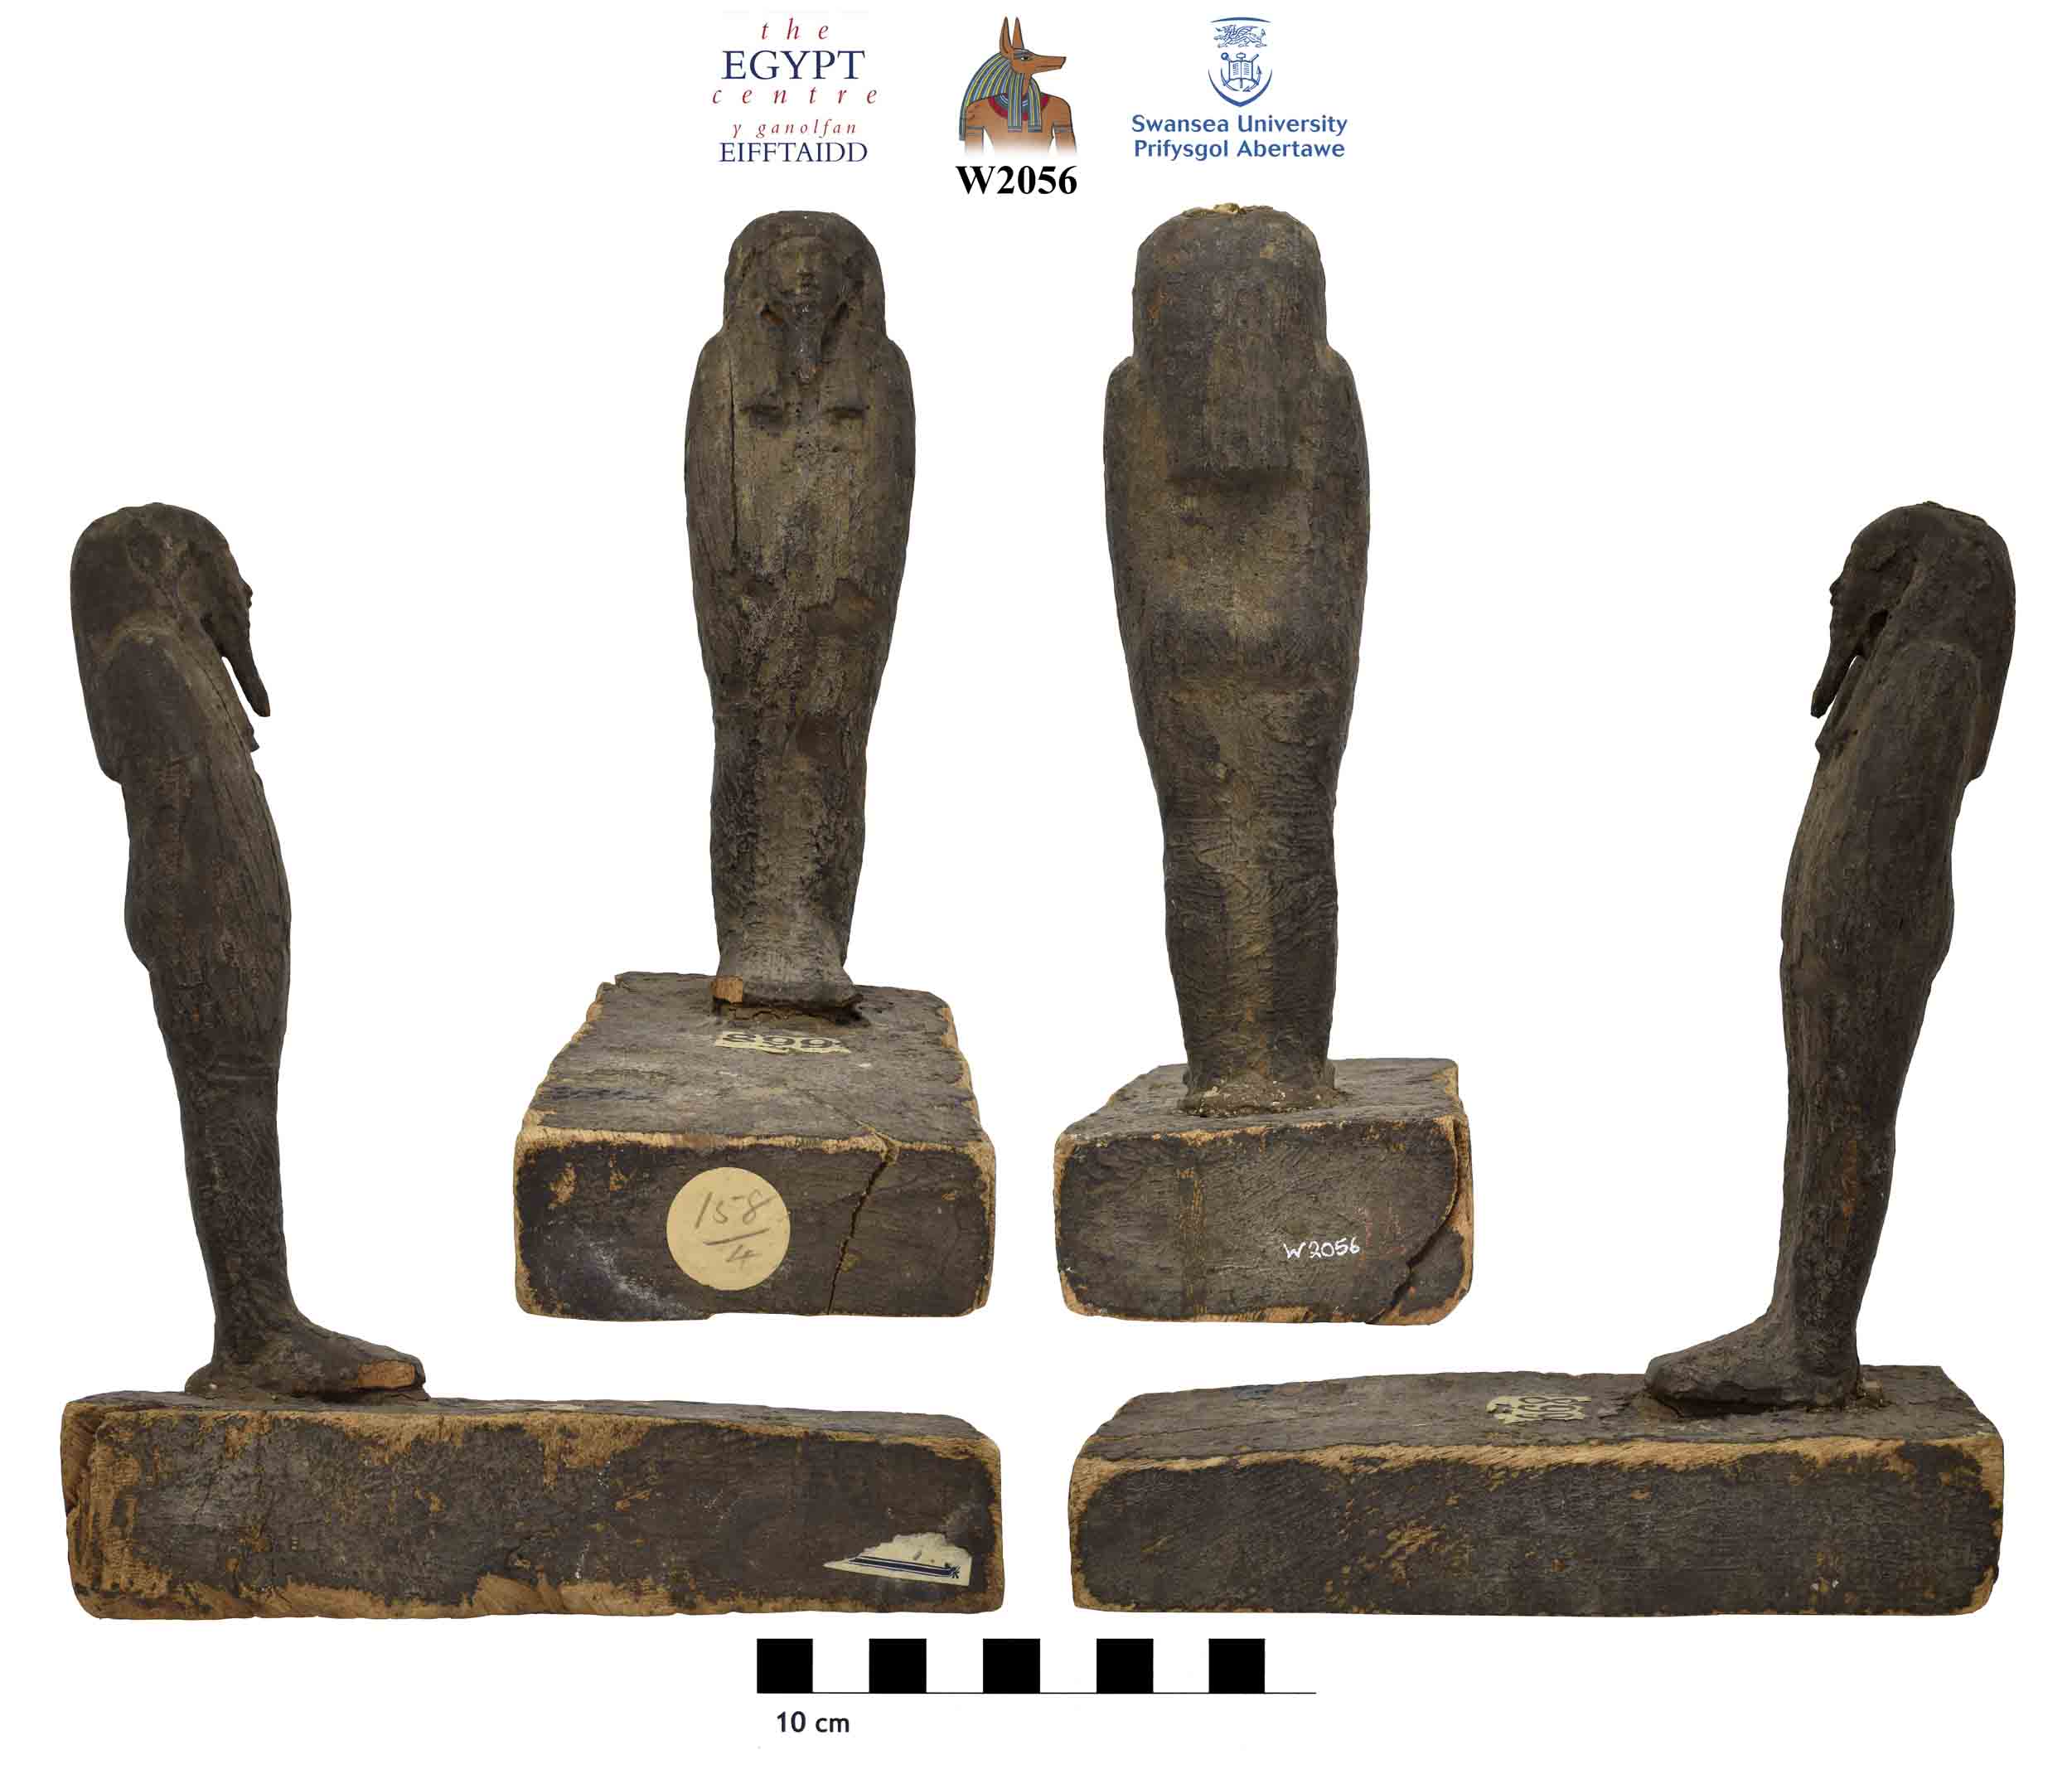 Image for: Osiris statue